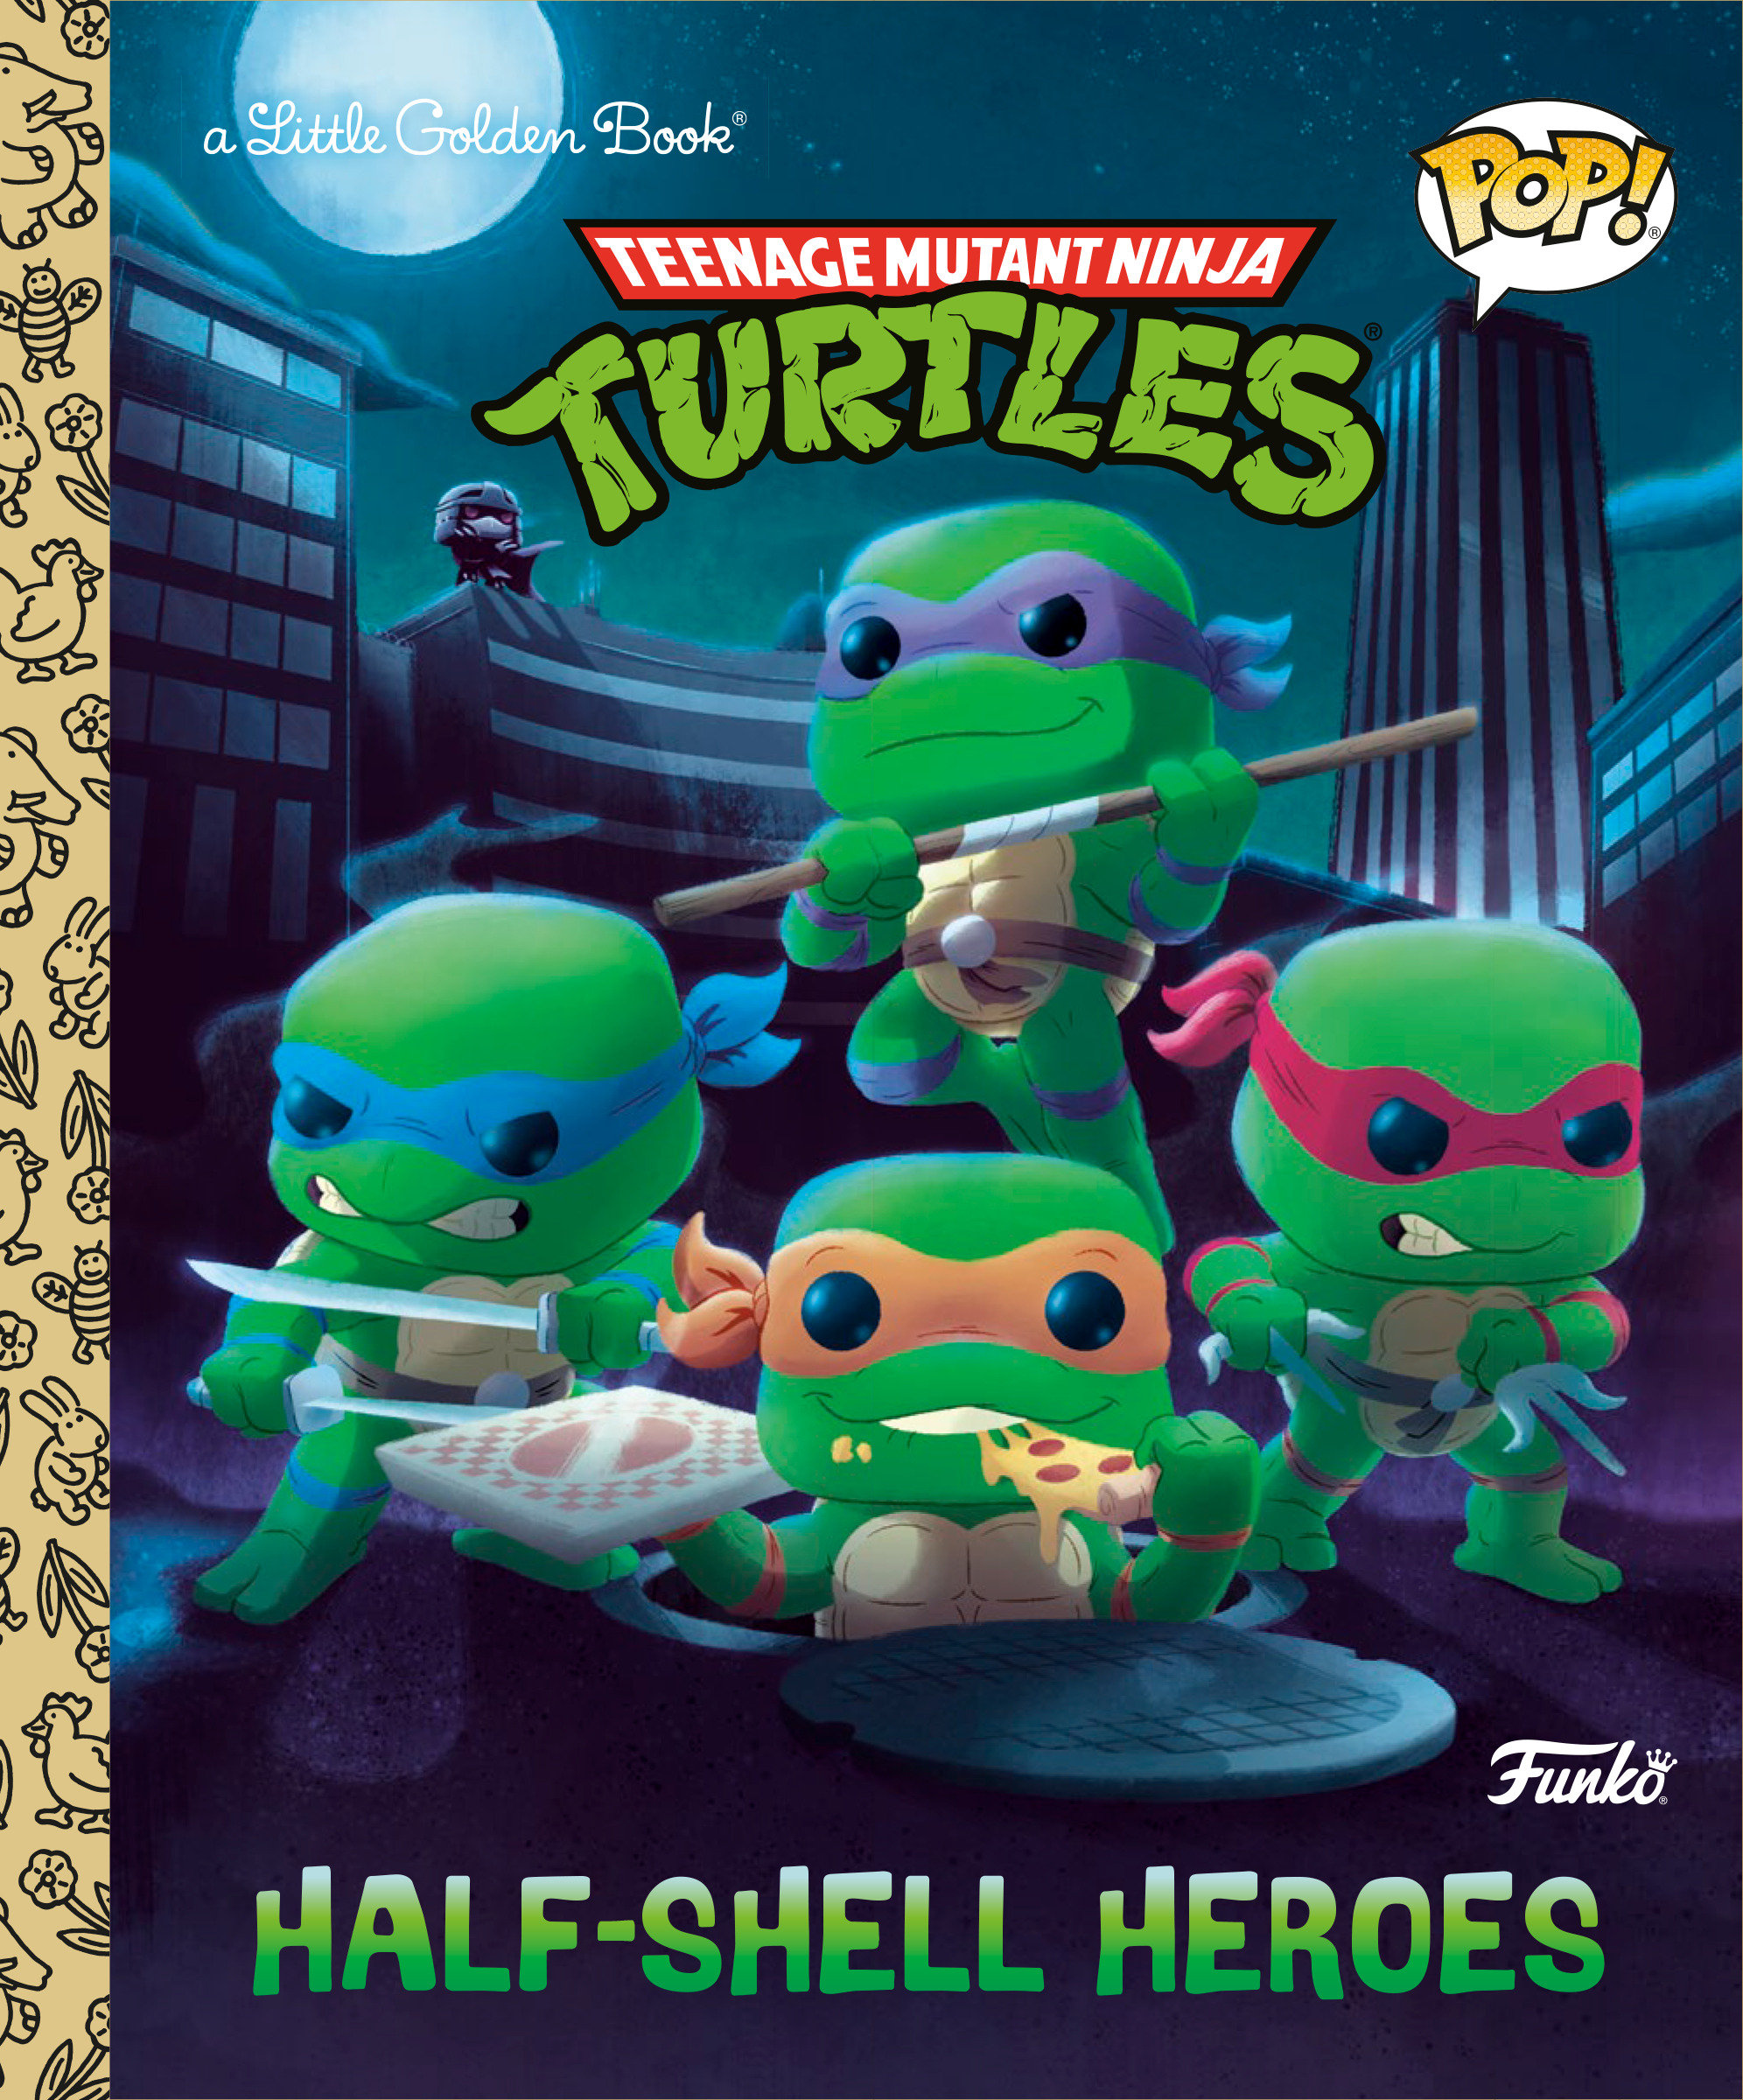 Funko Teenage Mutant Ninja Turtles Half-Shell Little Golden Book